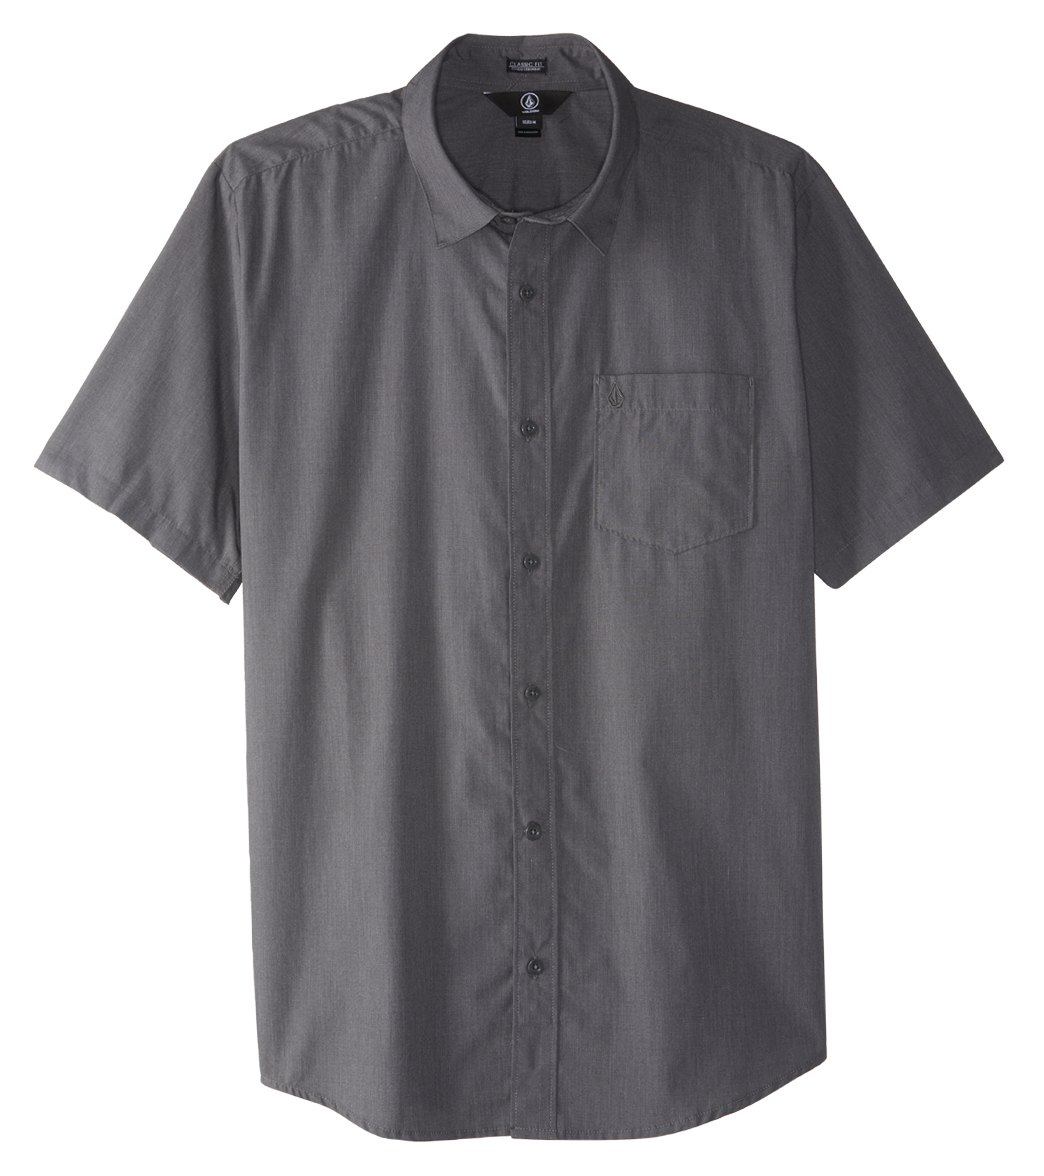 Volcom Men's Everett Solid Short Sleeve Shirt - Asphalt Black Small Cotton/Polyester - Swimoutlet.com